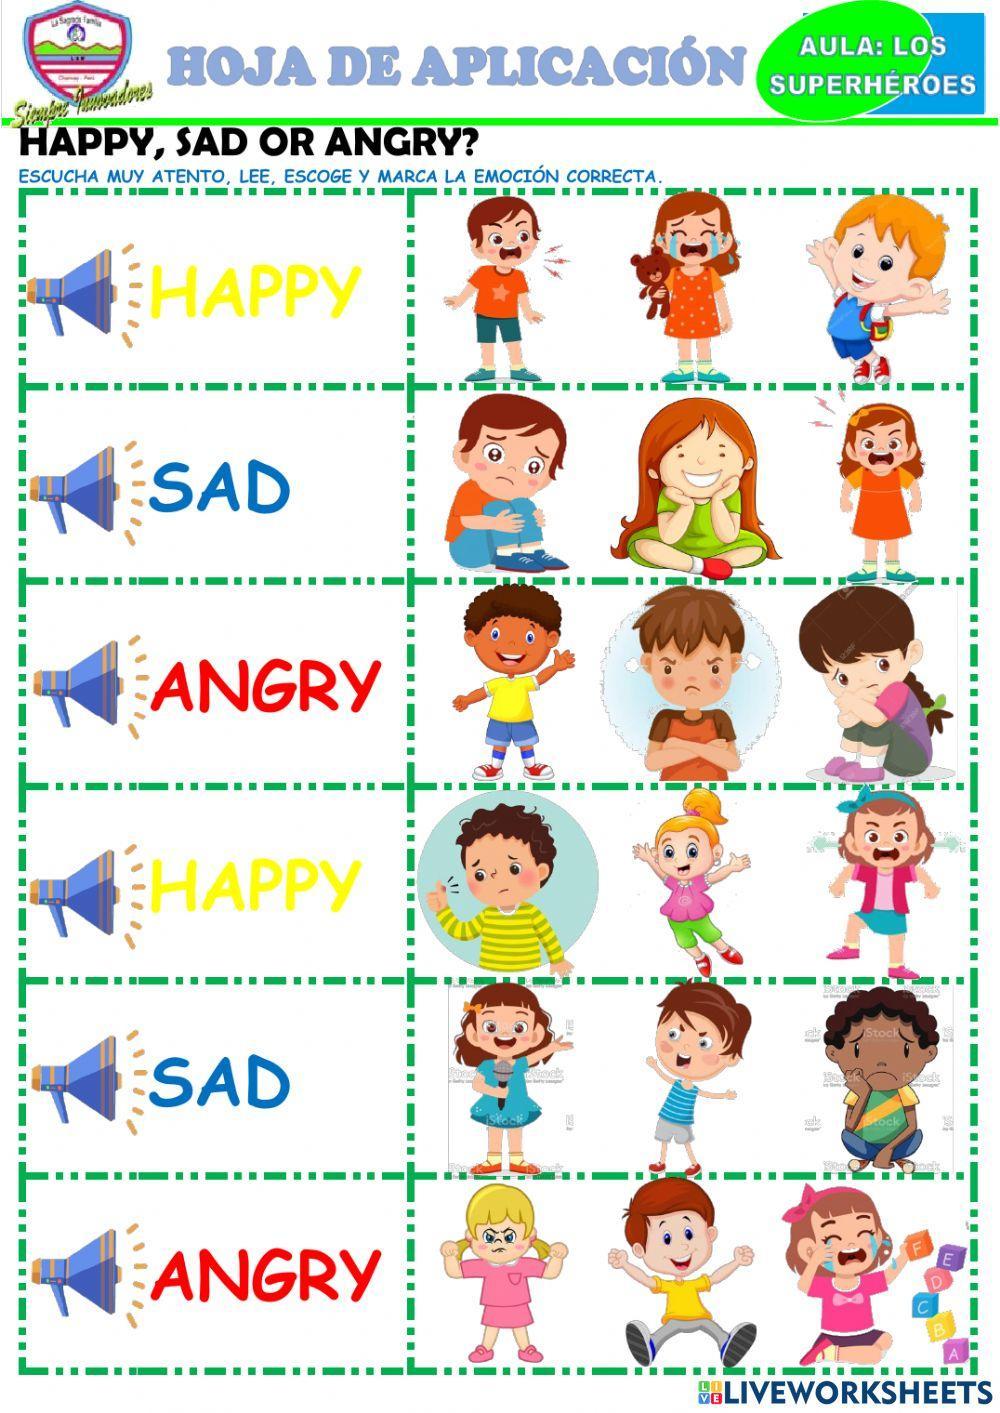 Happy, sad or angry?